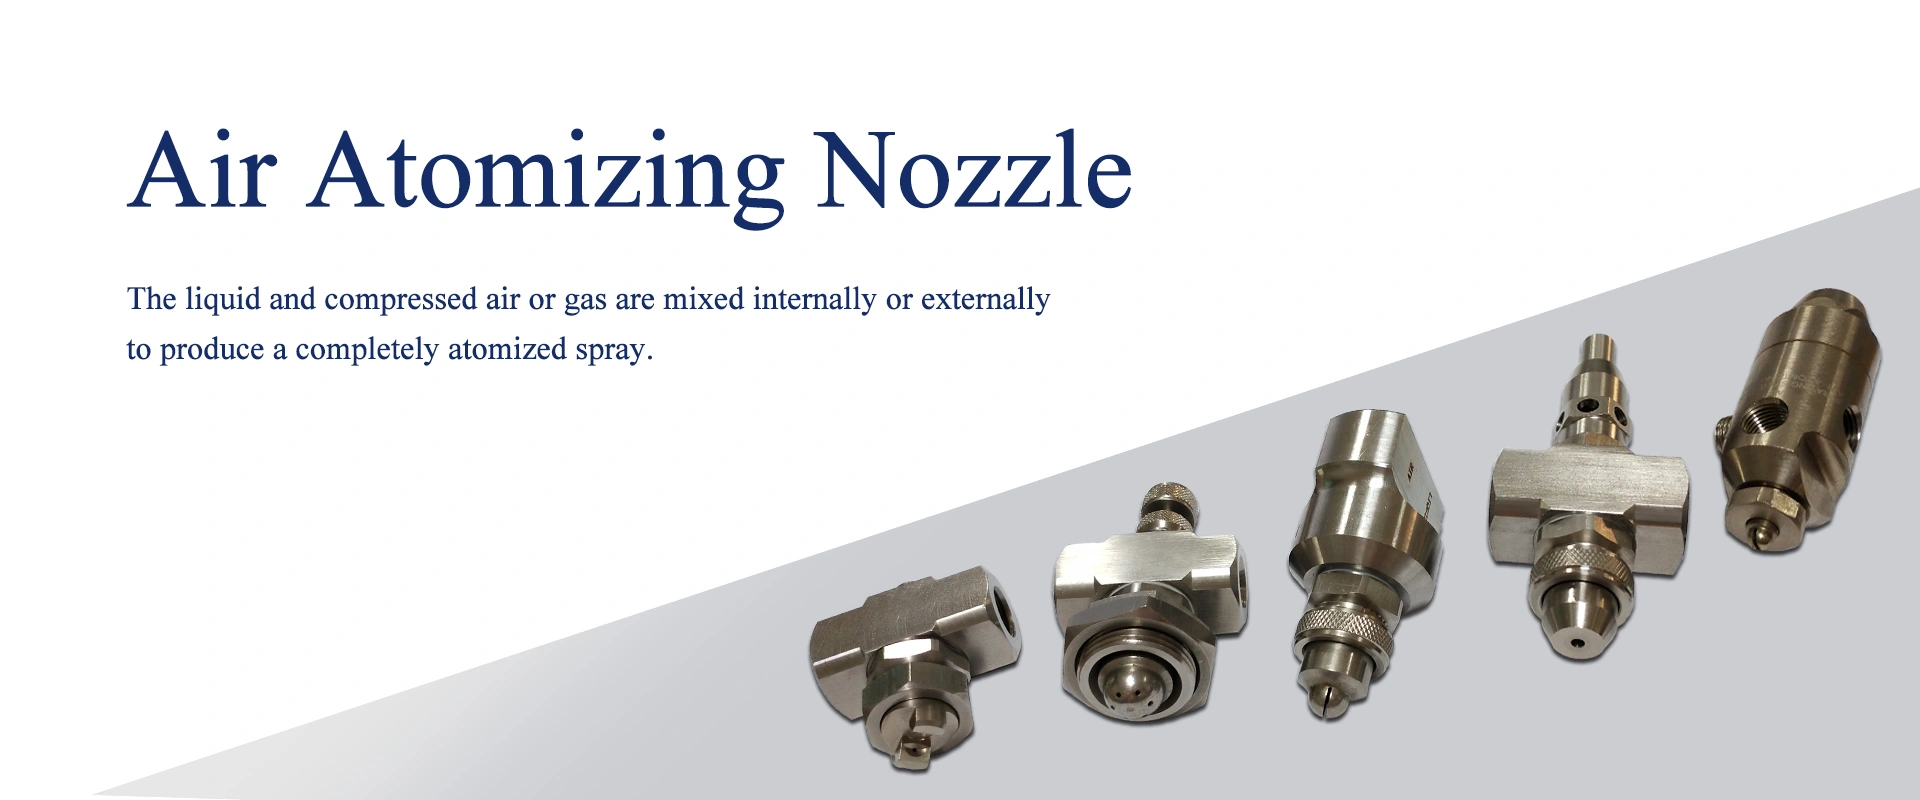 air atomizing nozzles